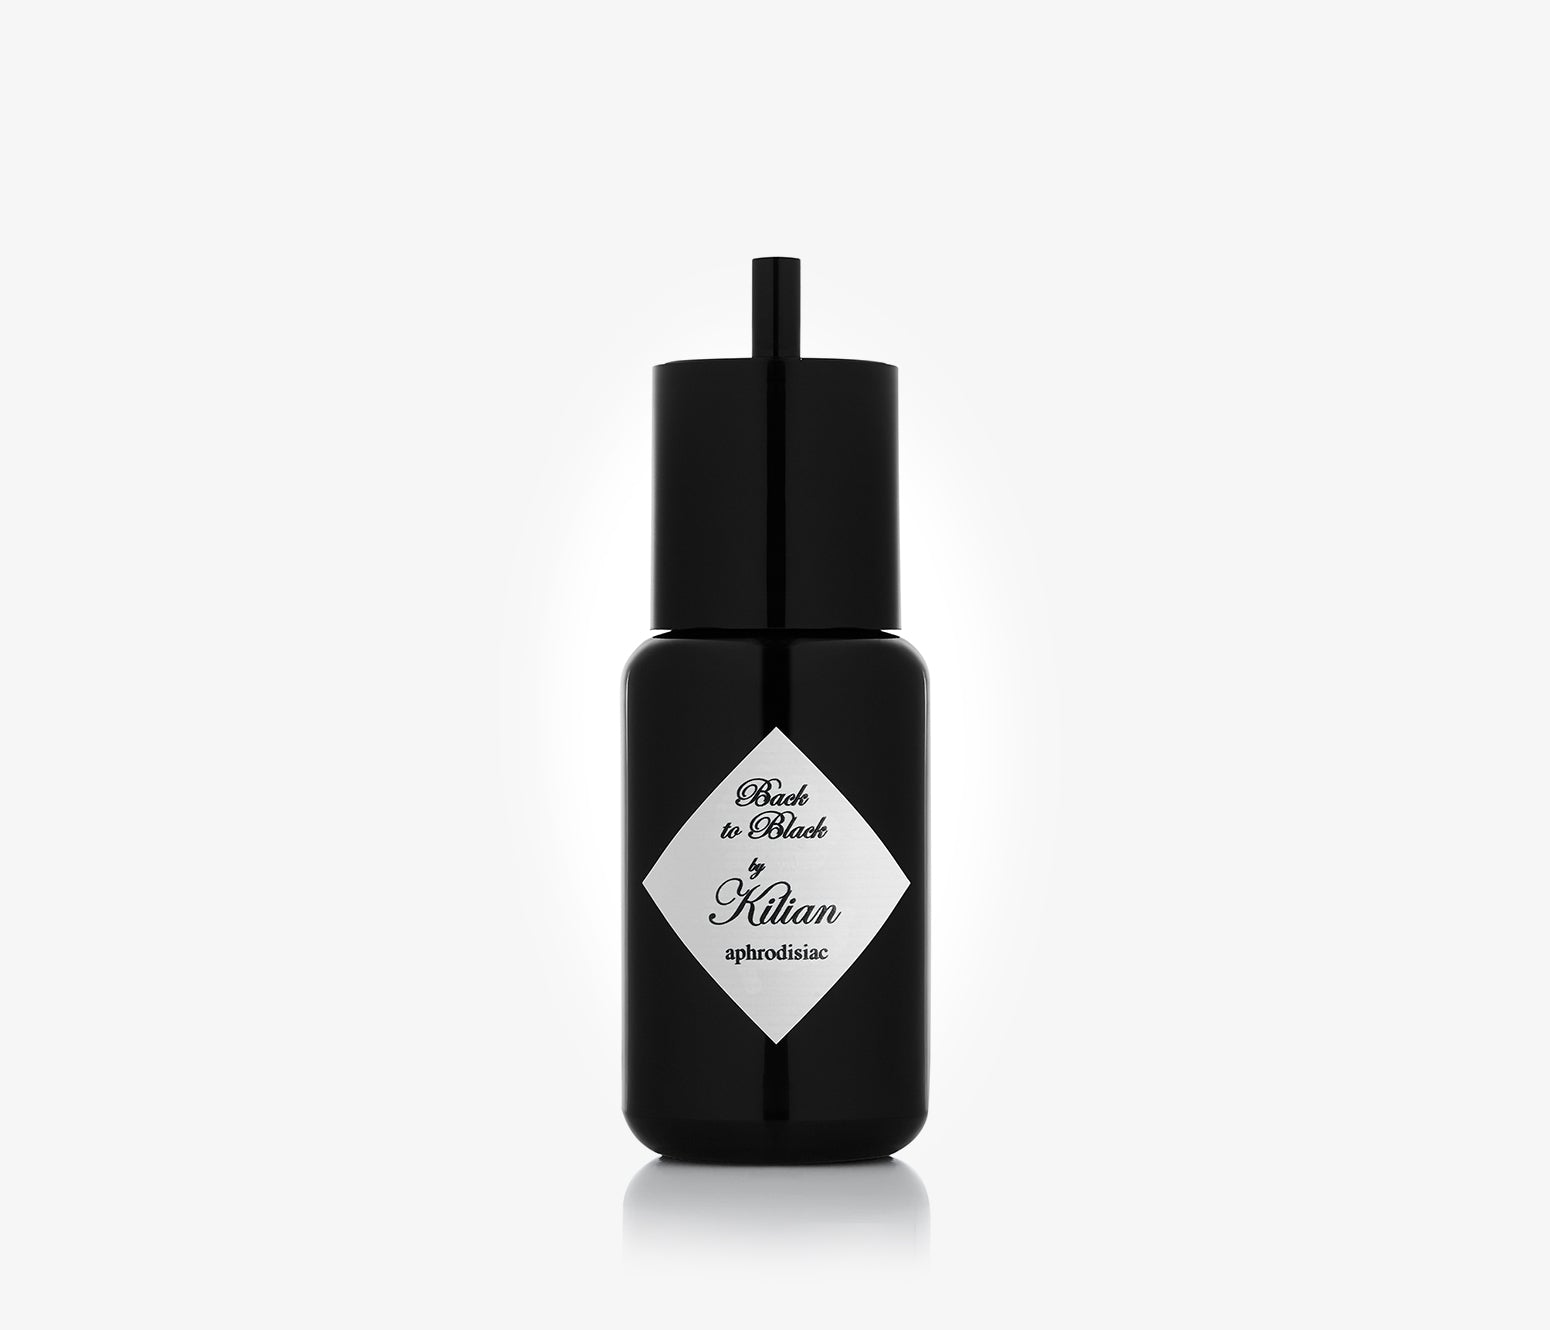 Product image - Kilian Paris - Back to Black, aphrodisiac 50ml refill